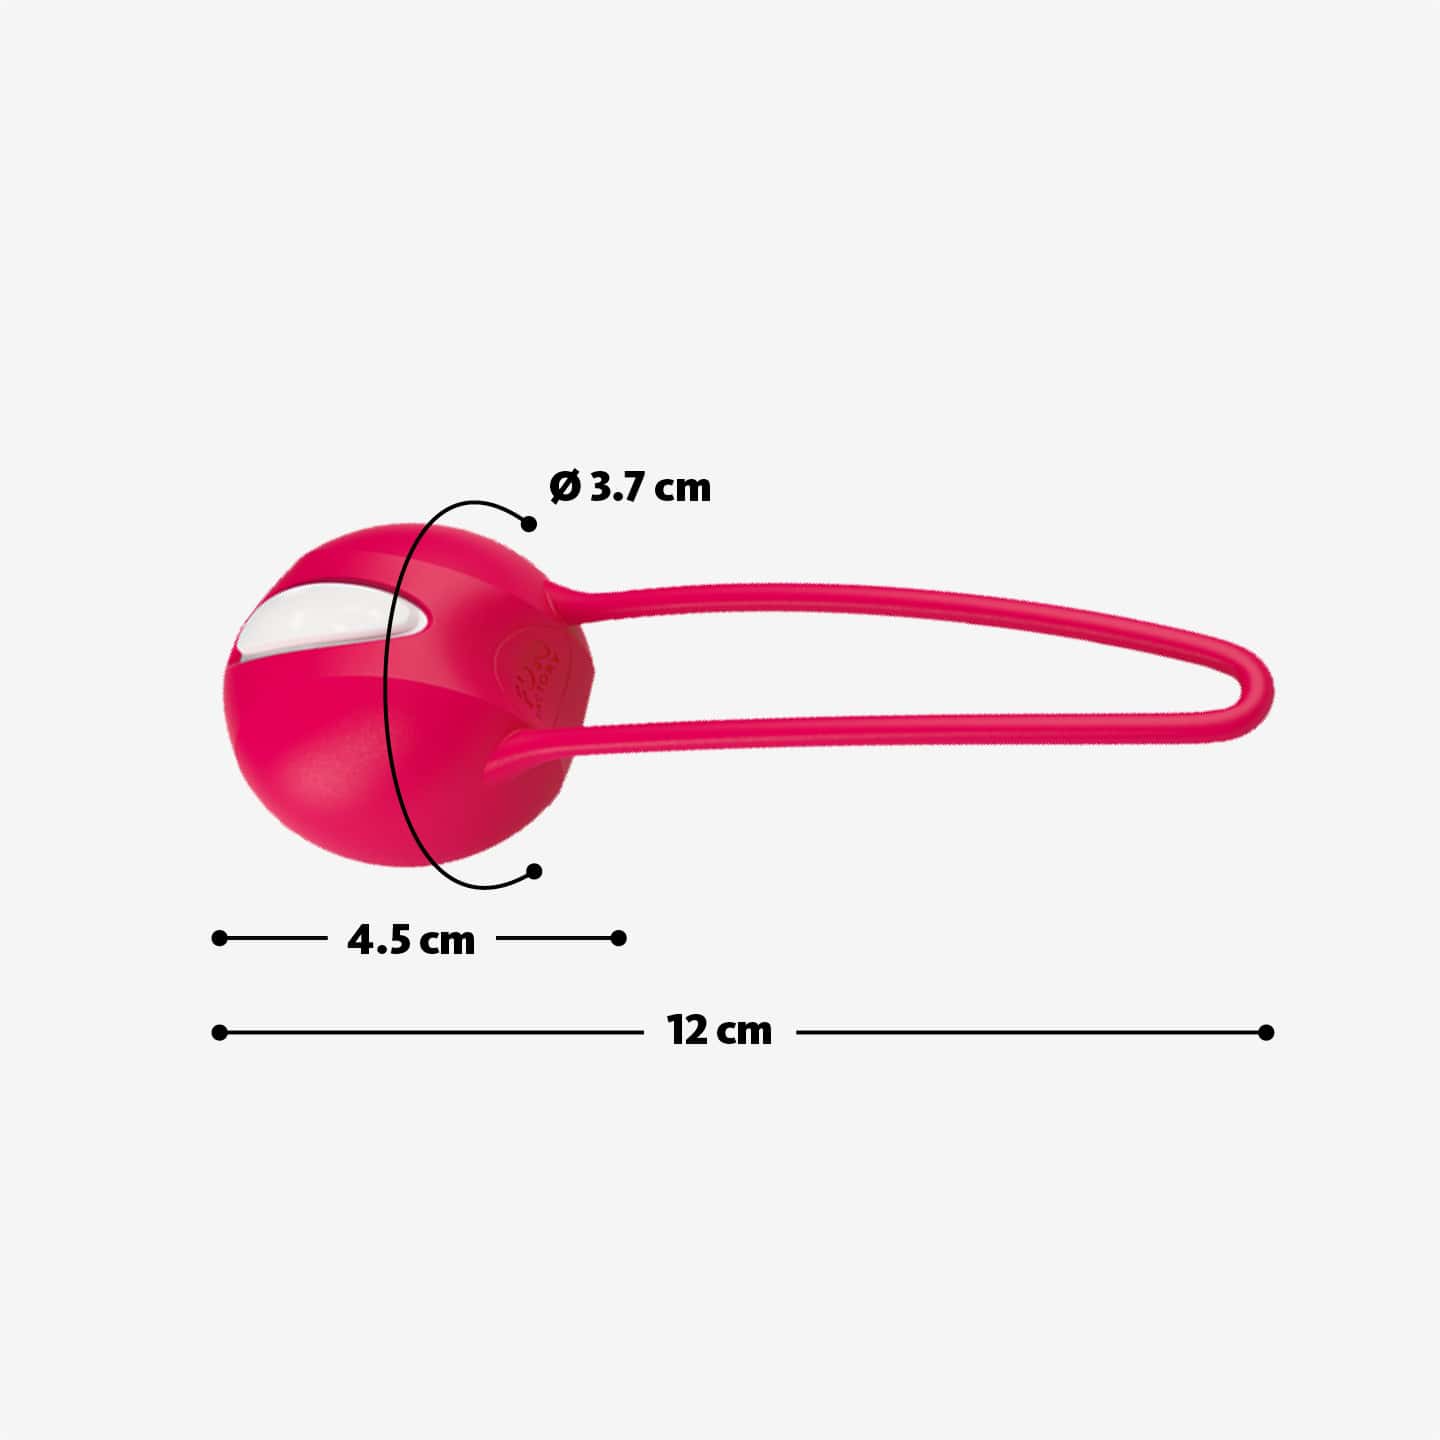 SMARTBALL UNO india red kegel ball measurements